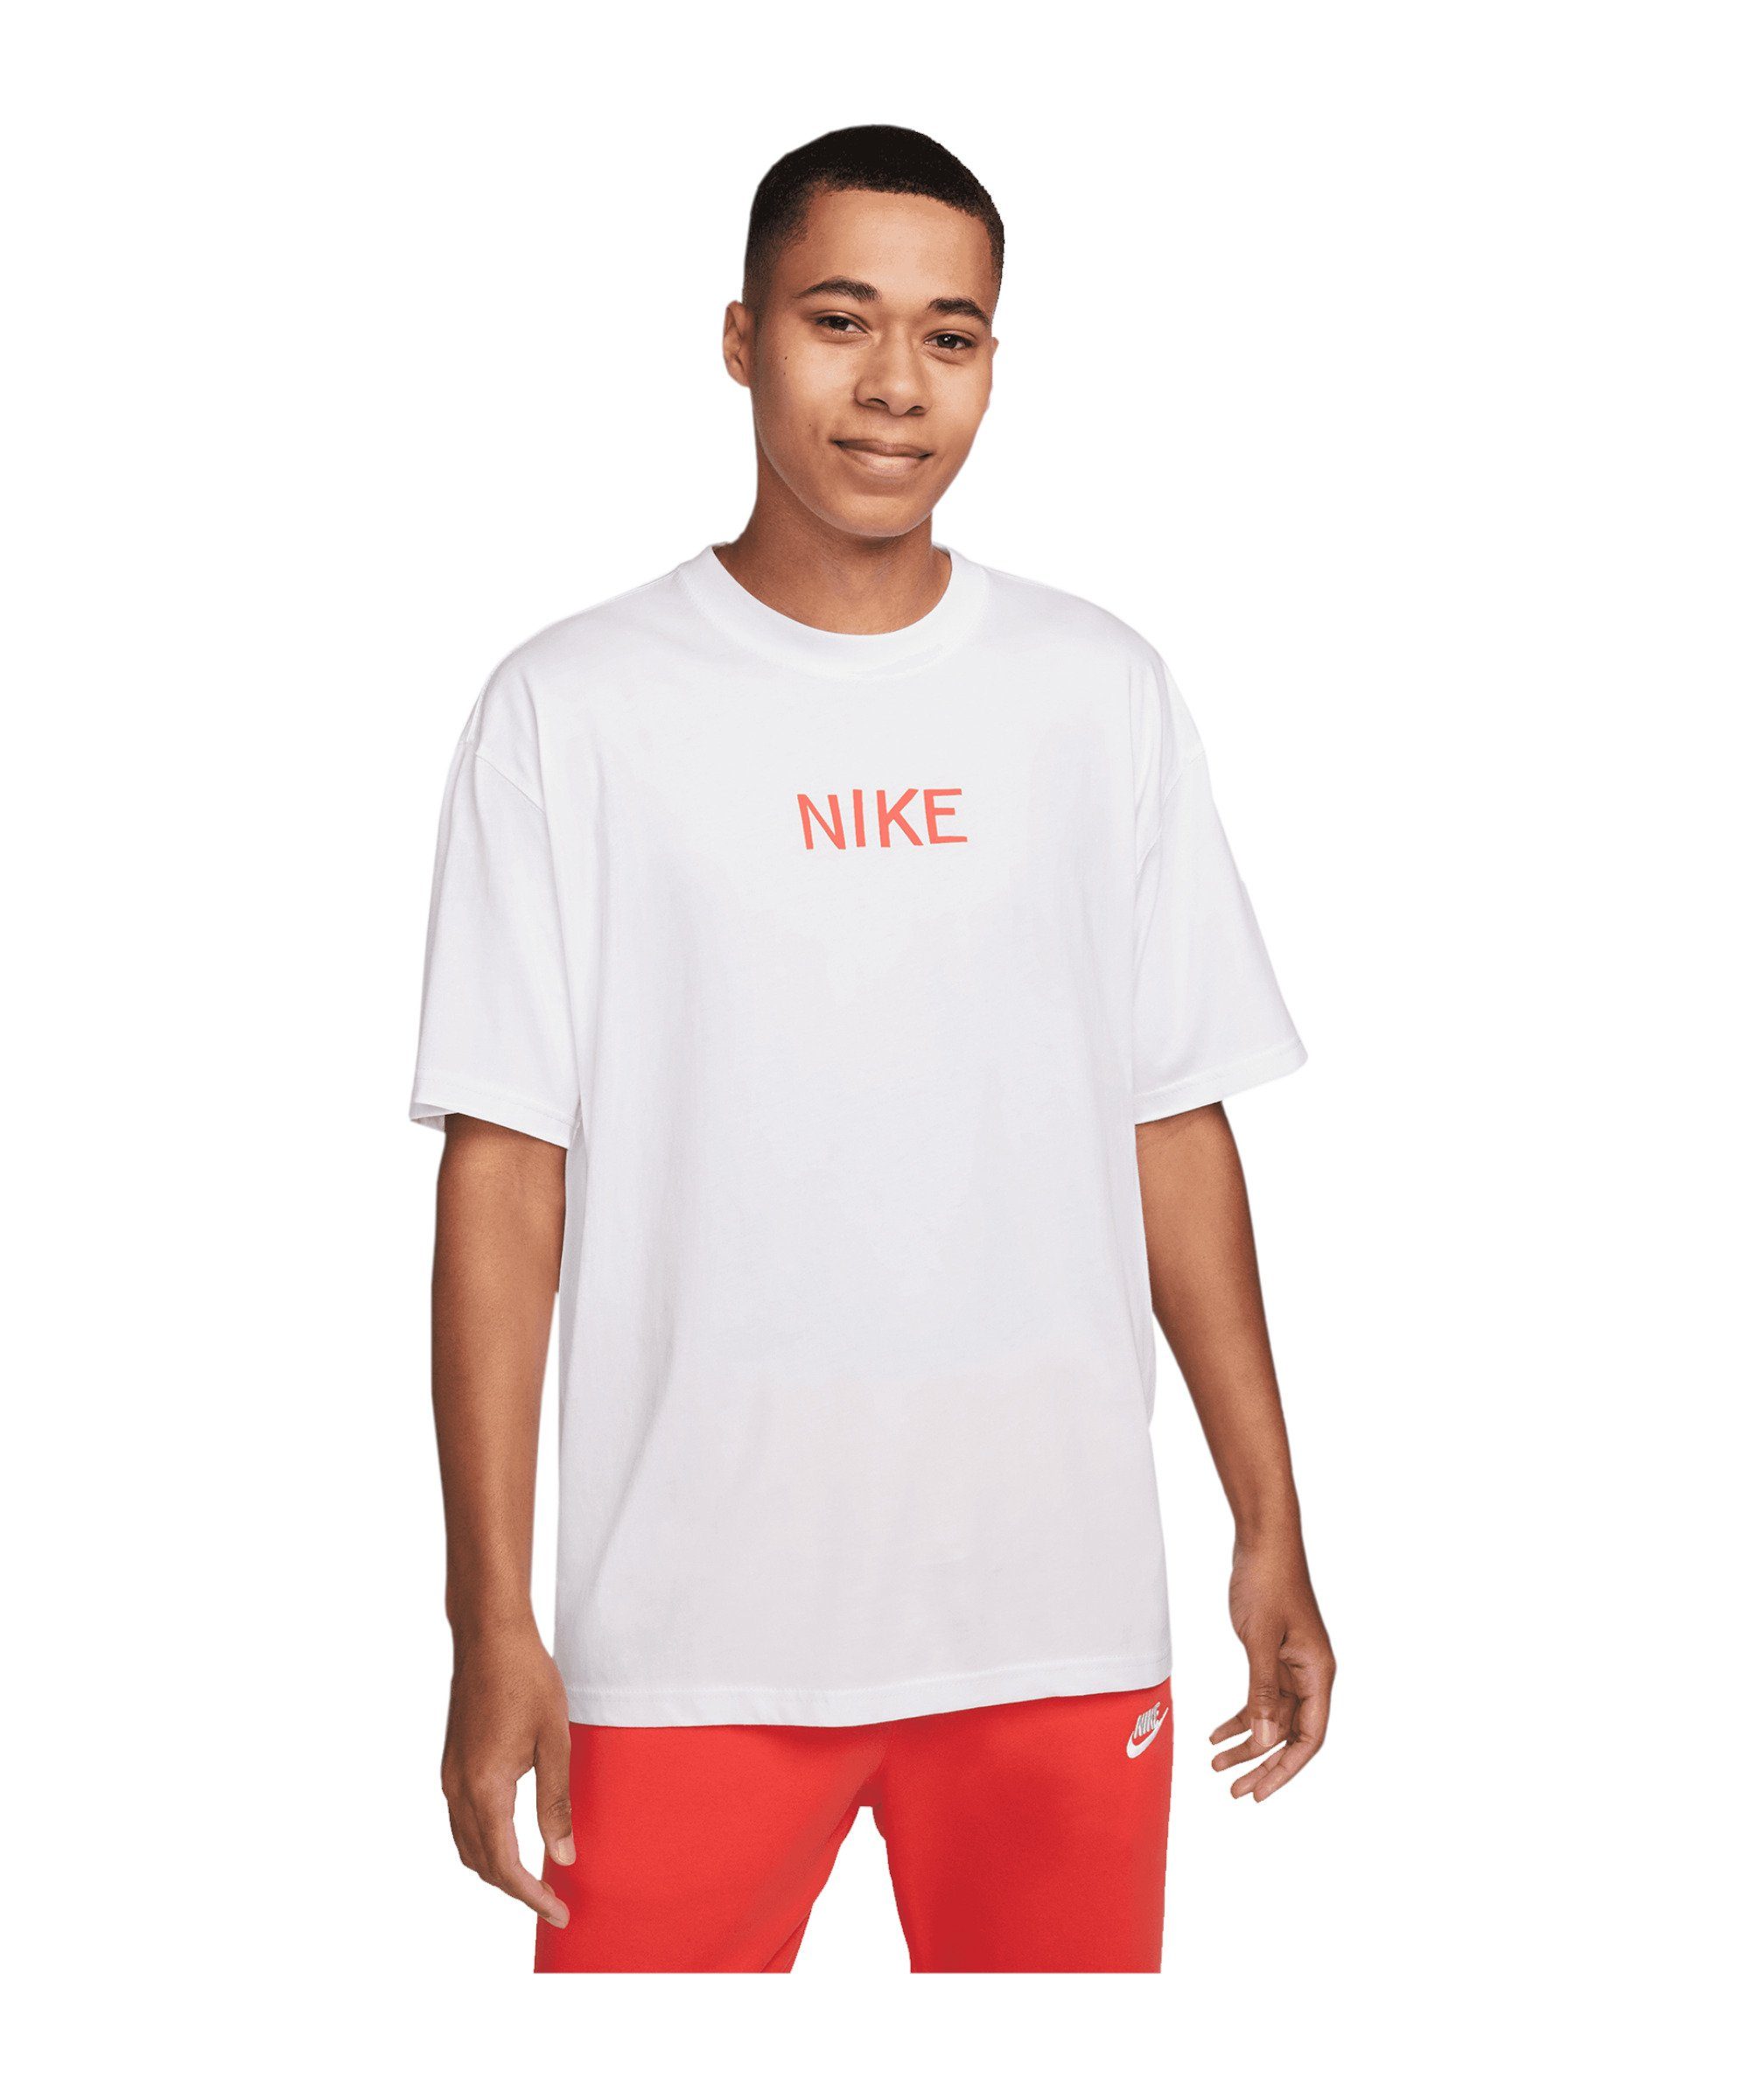 [Zum niedrigsten Preis verkaufen!] Nike Sportswear T-Shirt default Max90 T-Shirt weiss